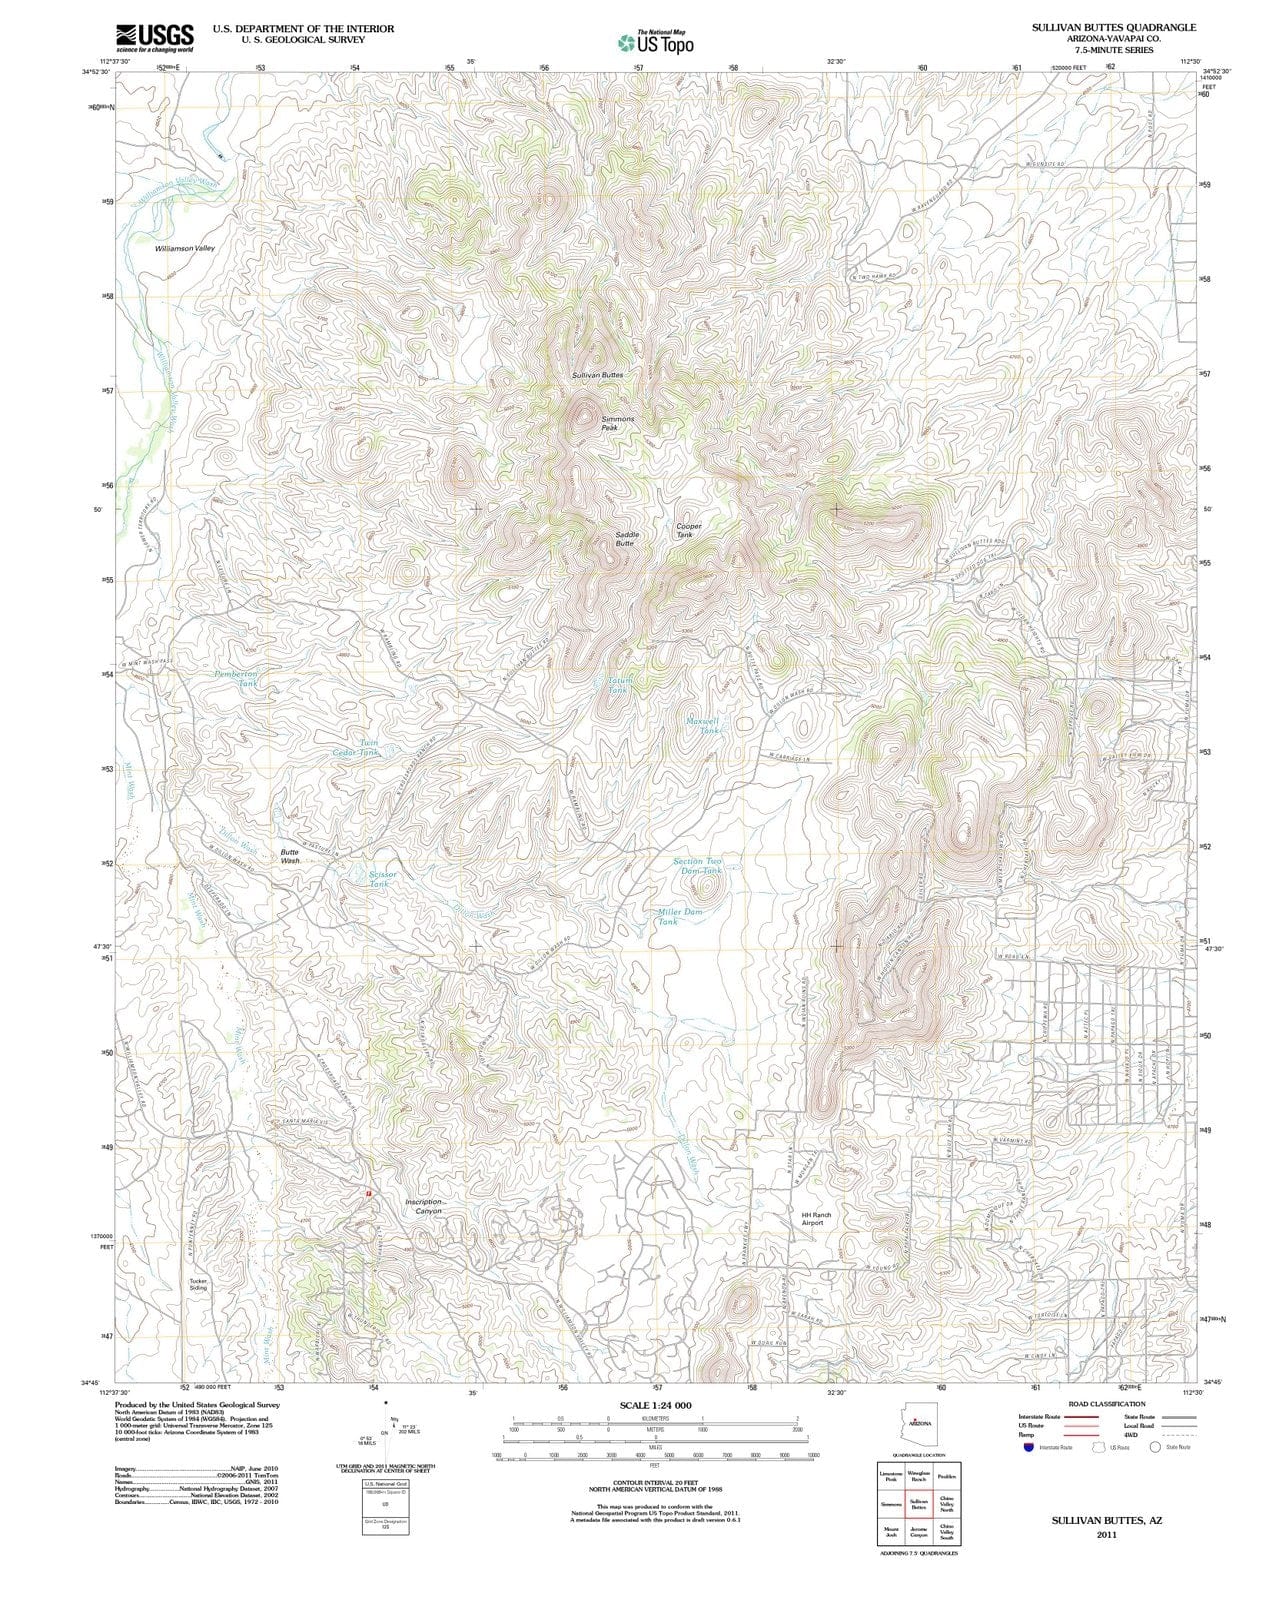 2011 Sullivan Buttes, AZ - Arizona - USGS Topographic Map